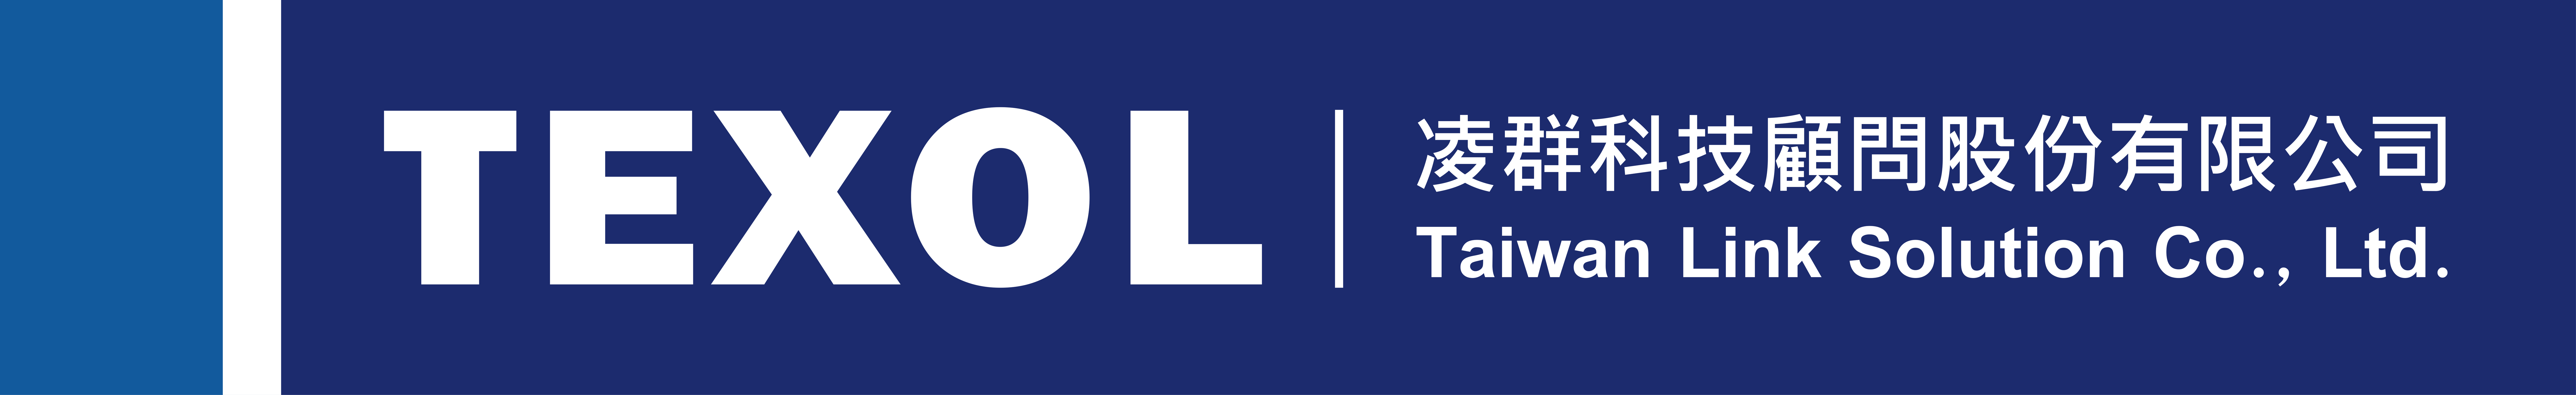 TEXOL Taiwan Link Solutions Co., Ltd